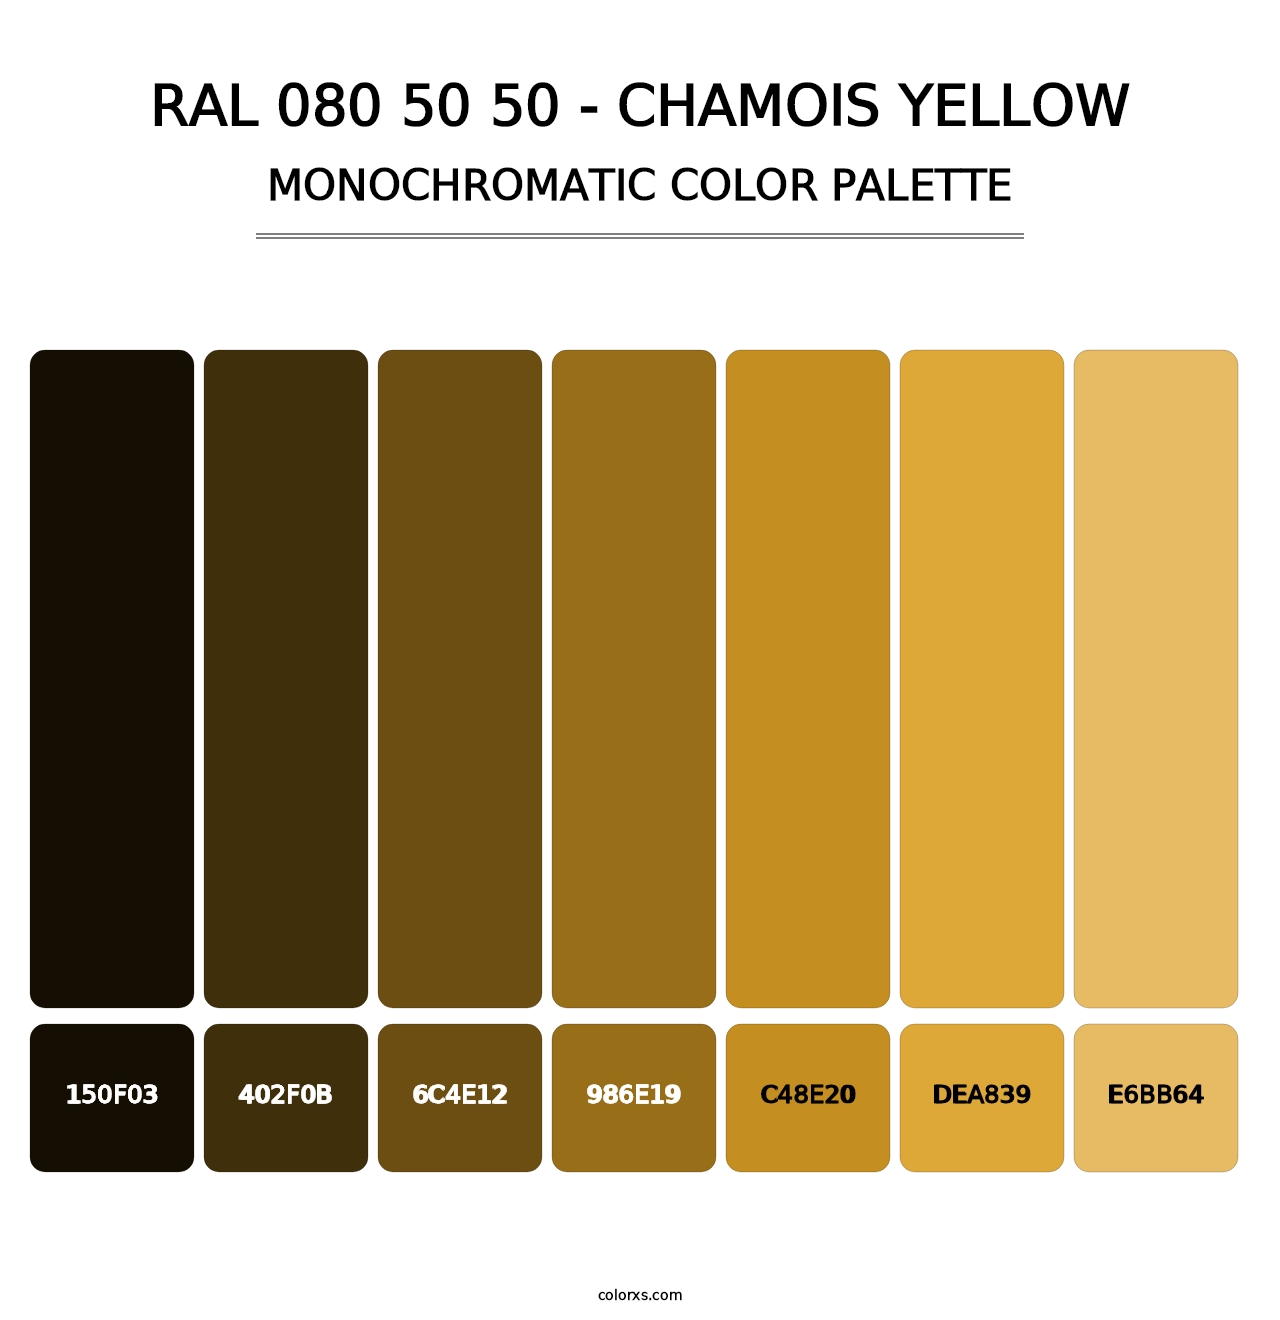 RAL 080 50 50 - Chamois Yellow - Monochromatic Color Palette